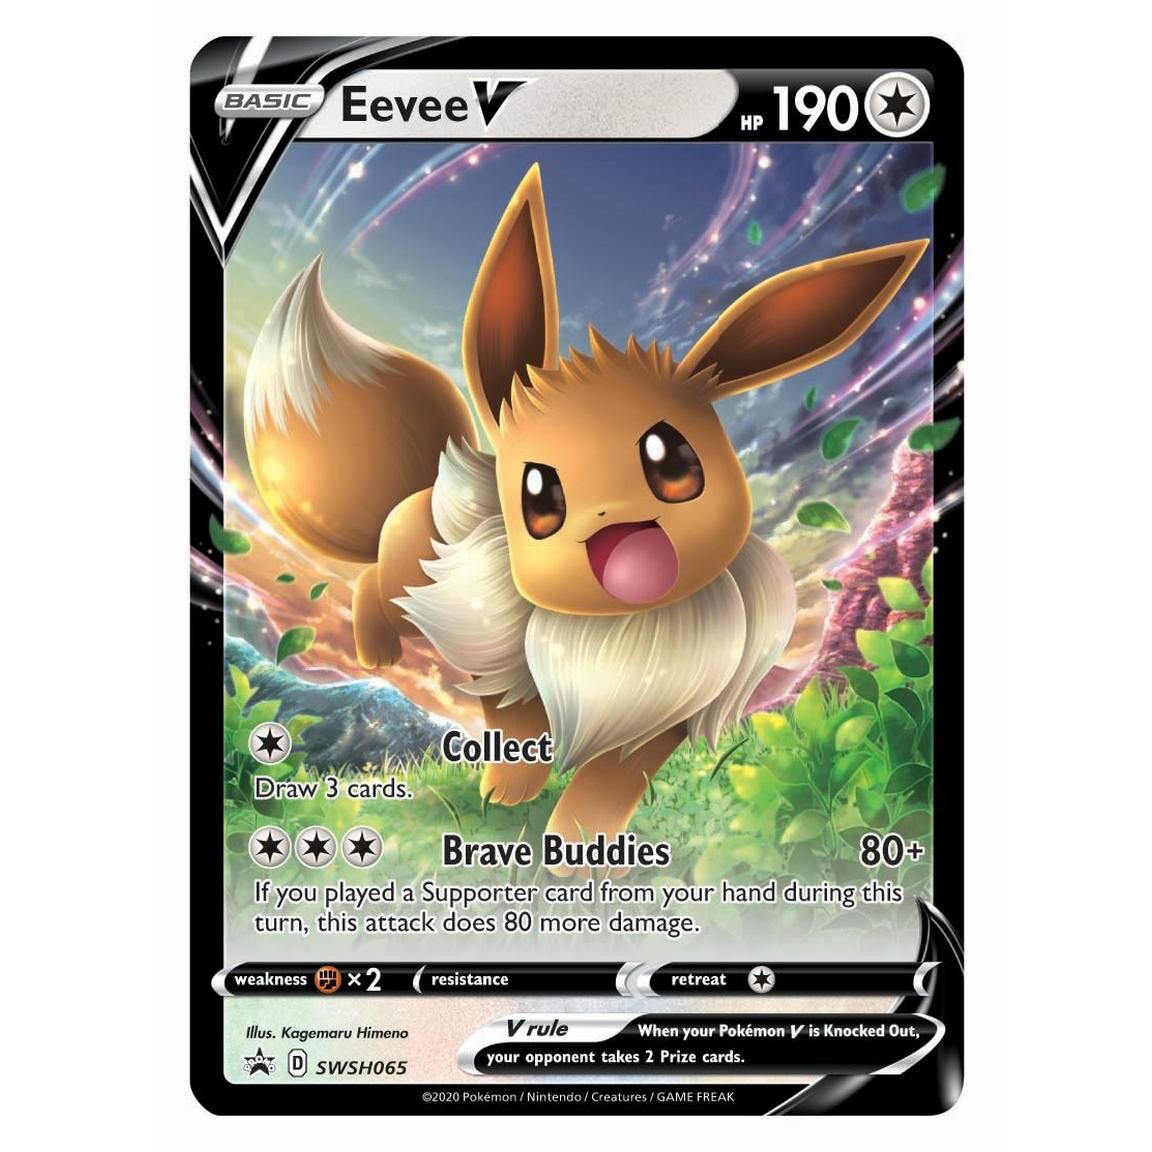 Pokémon TCG: Eevee Evolutions Premium Collection Box - EN 